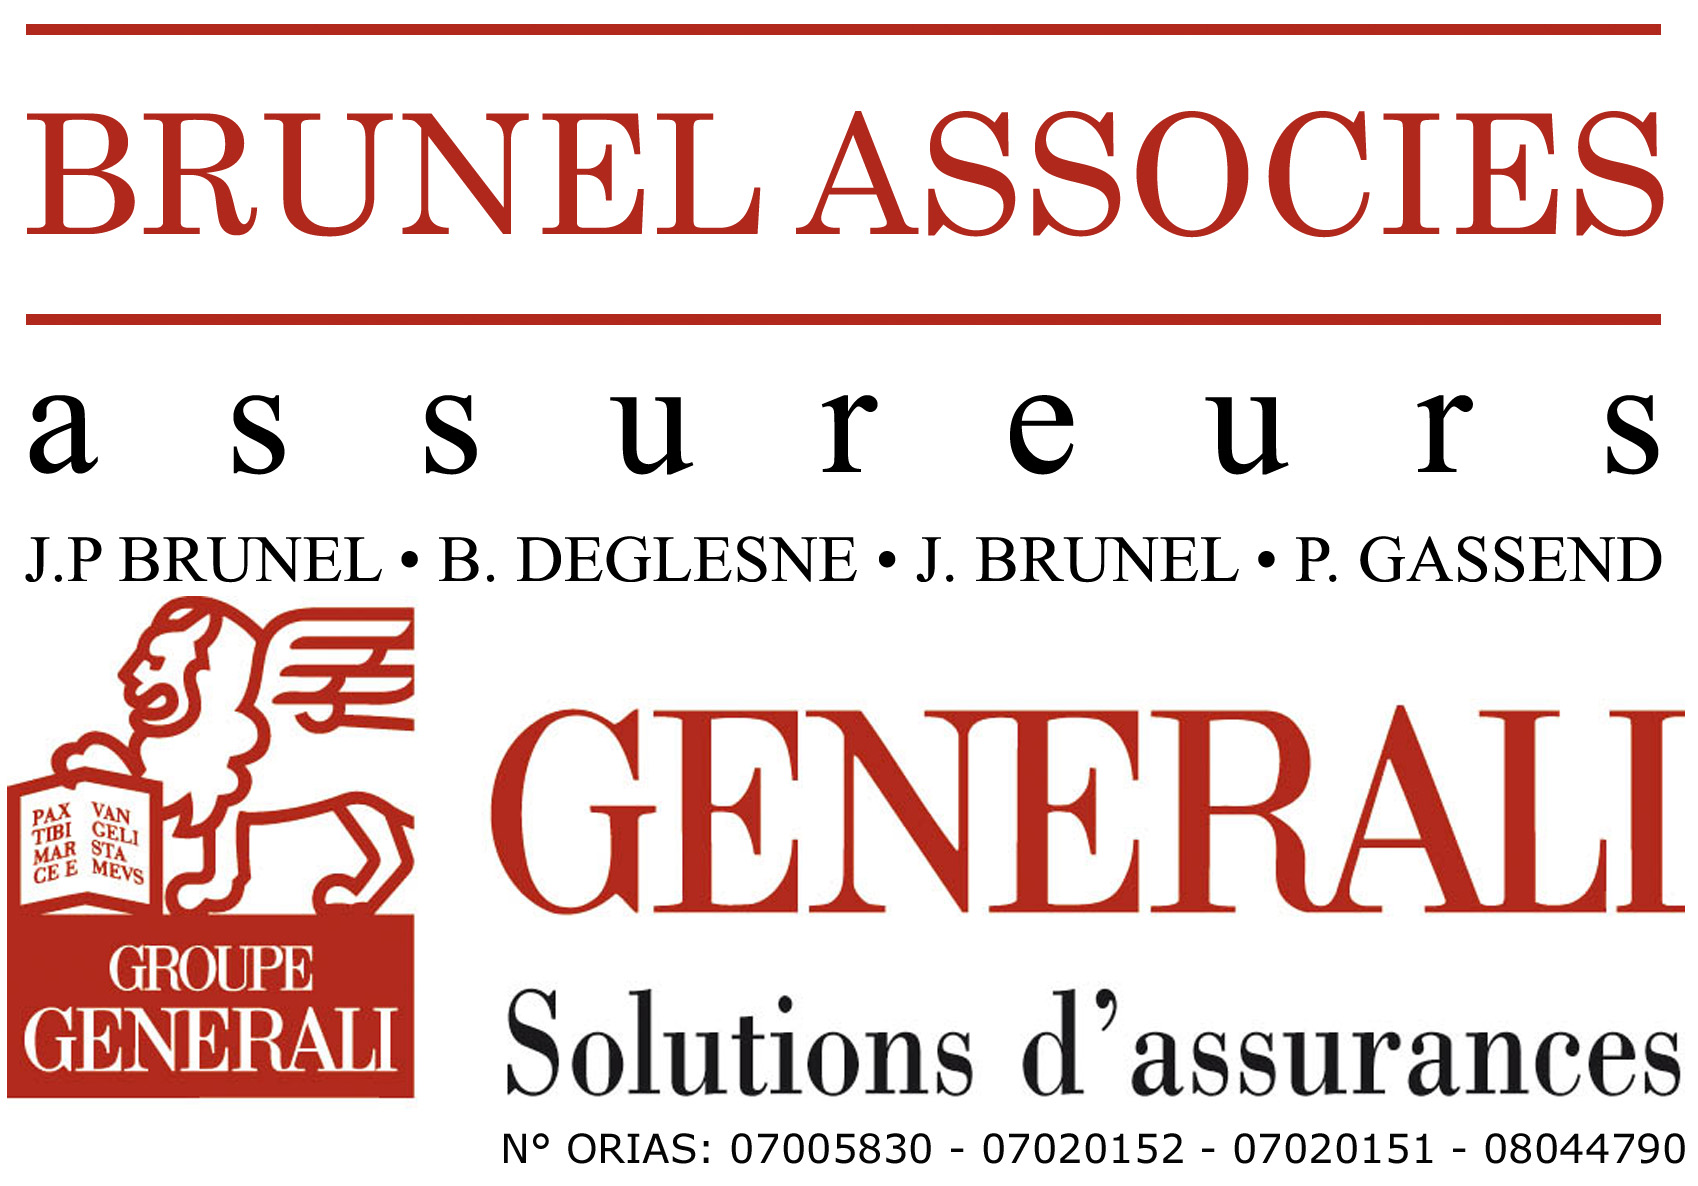 Brunel associés assureurs Generali